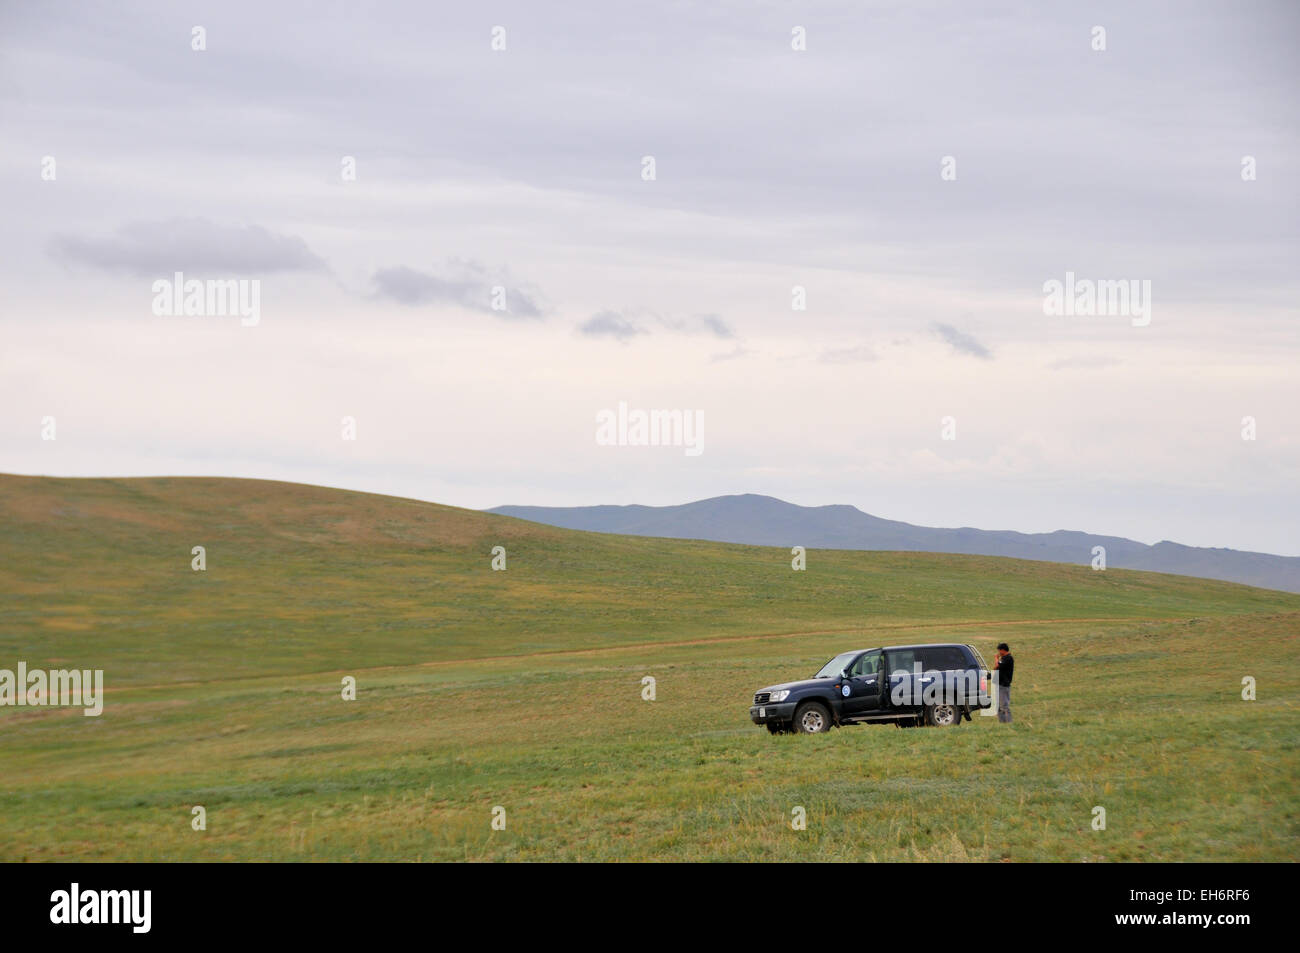 La guida verso Bayankhongor attraverso steppe erbose Foto Stock